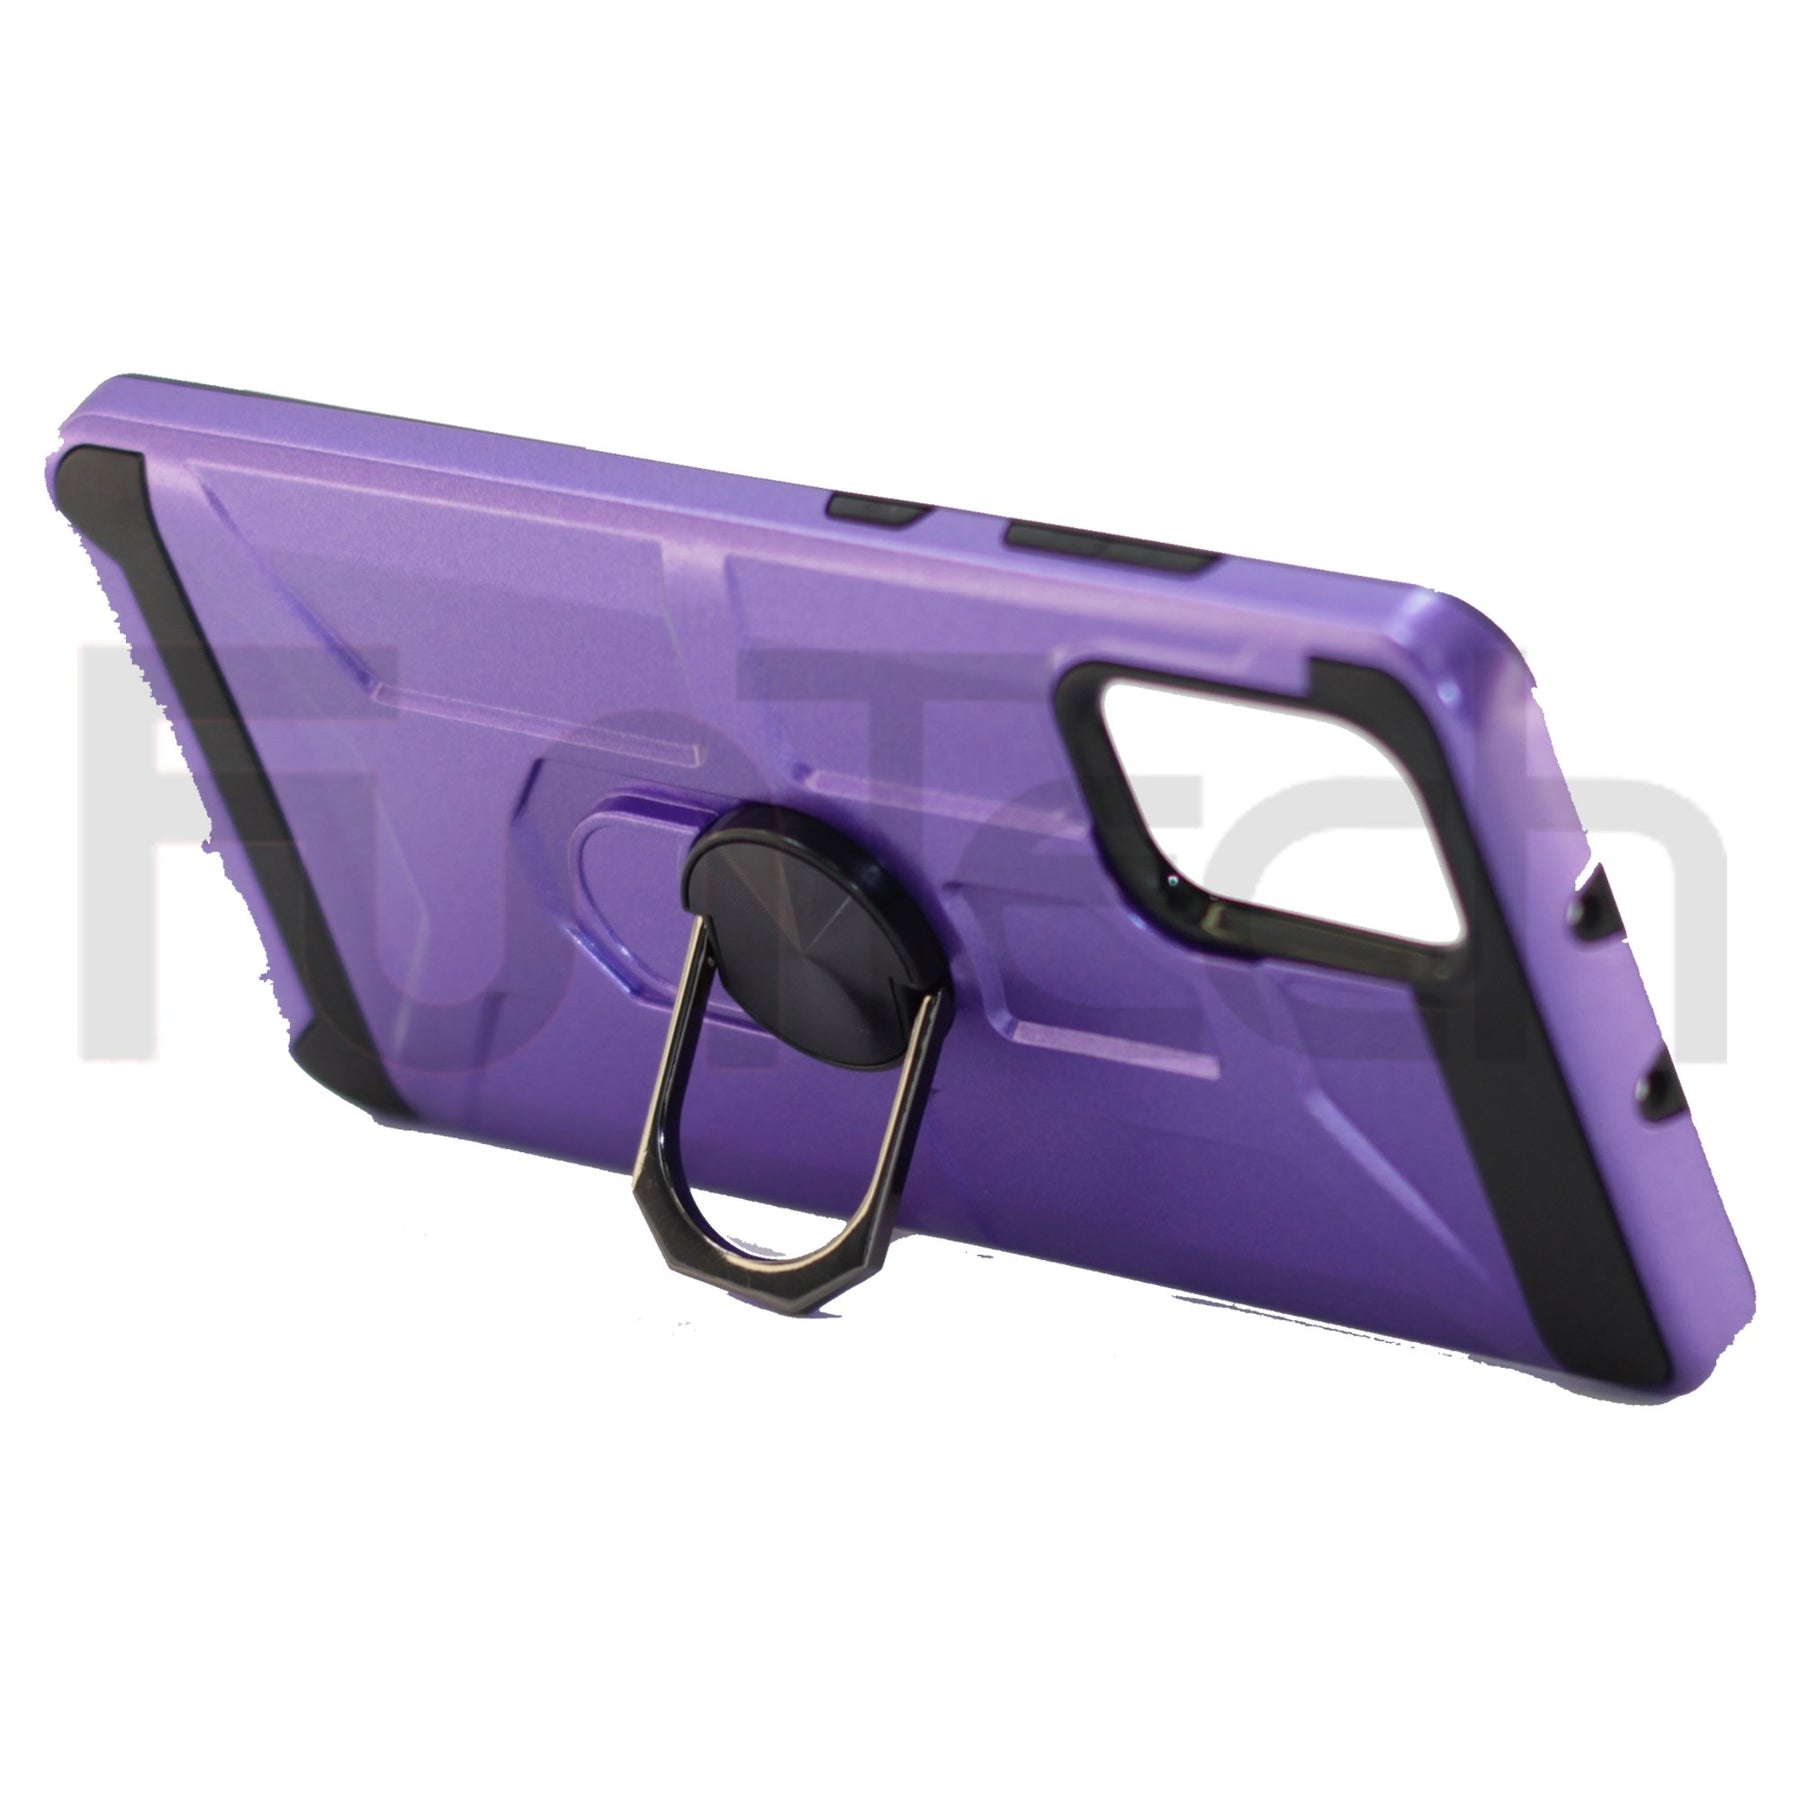 Ring Armor Case Color Purple